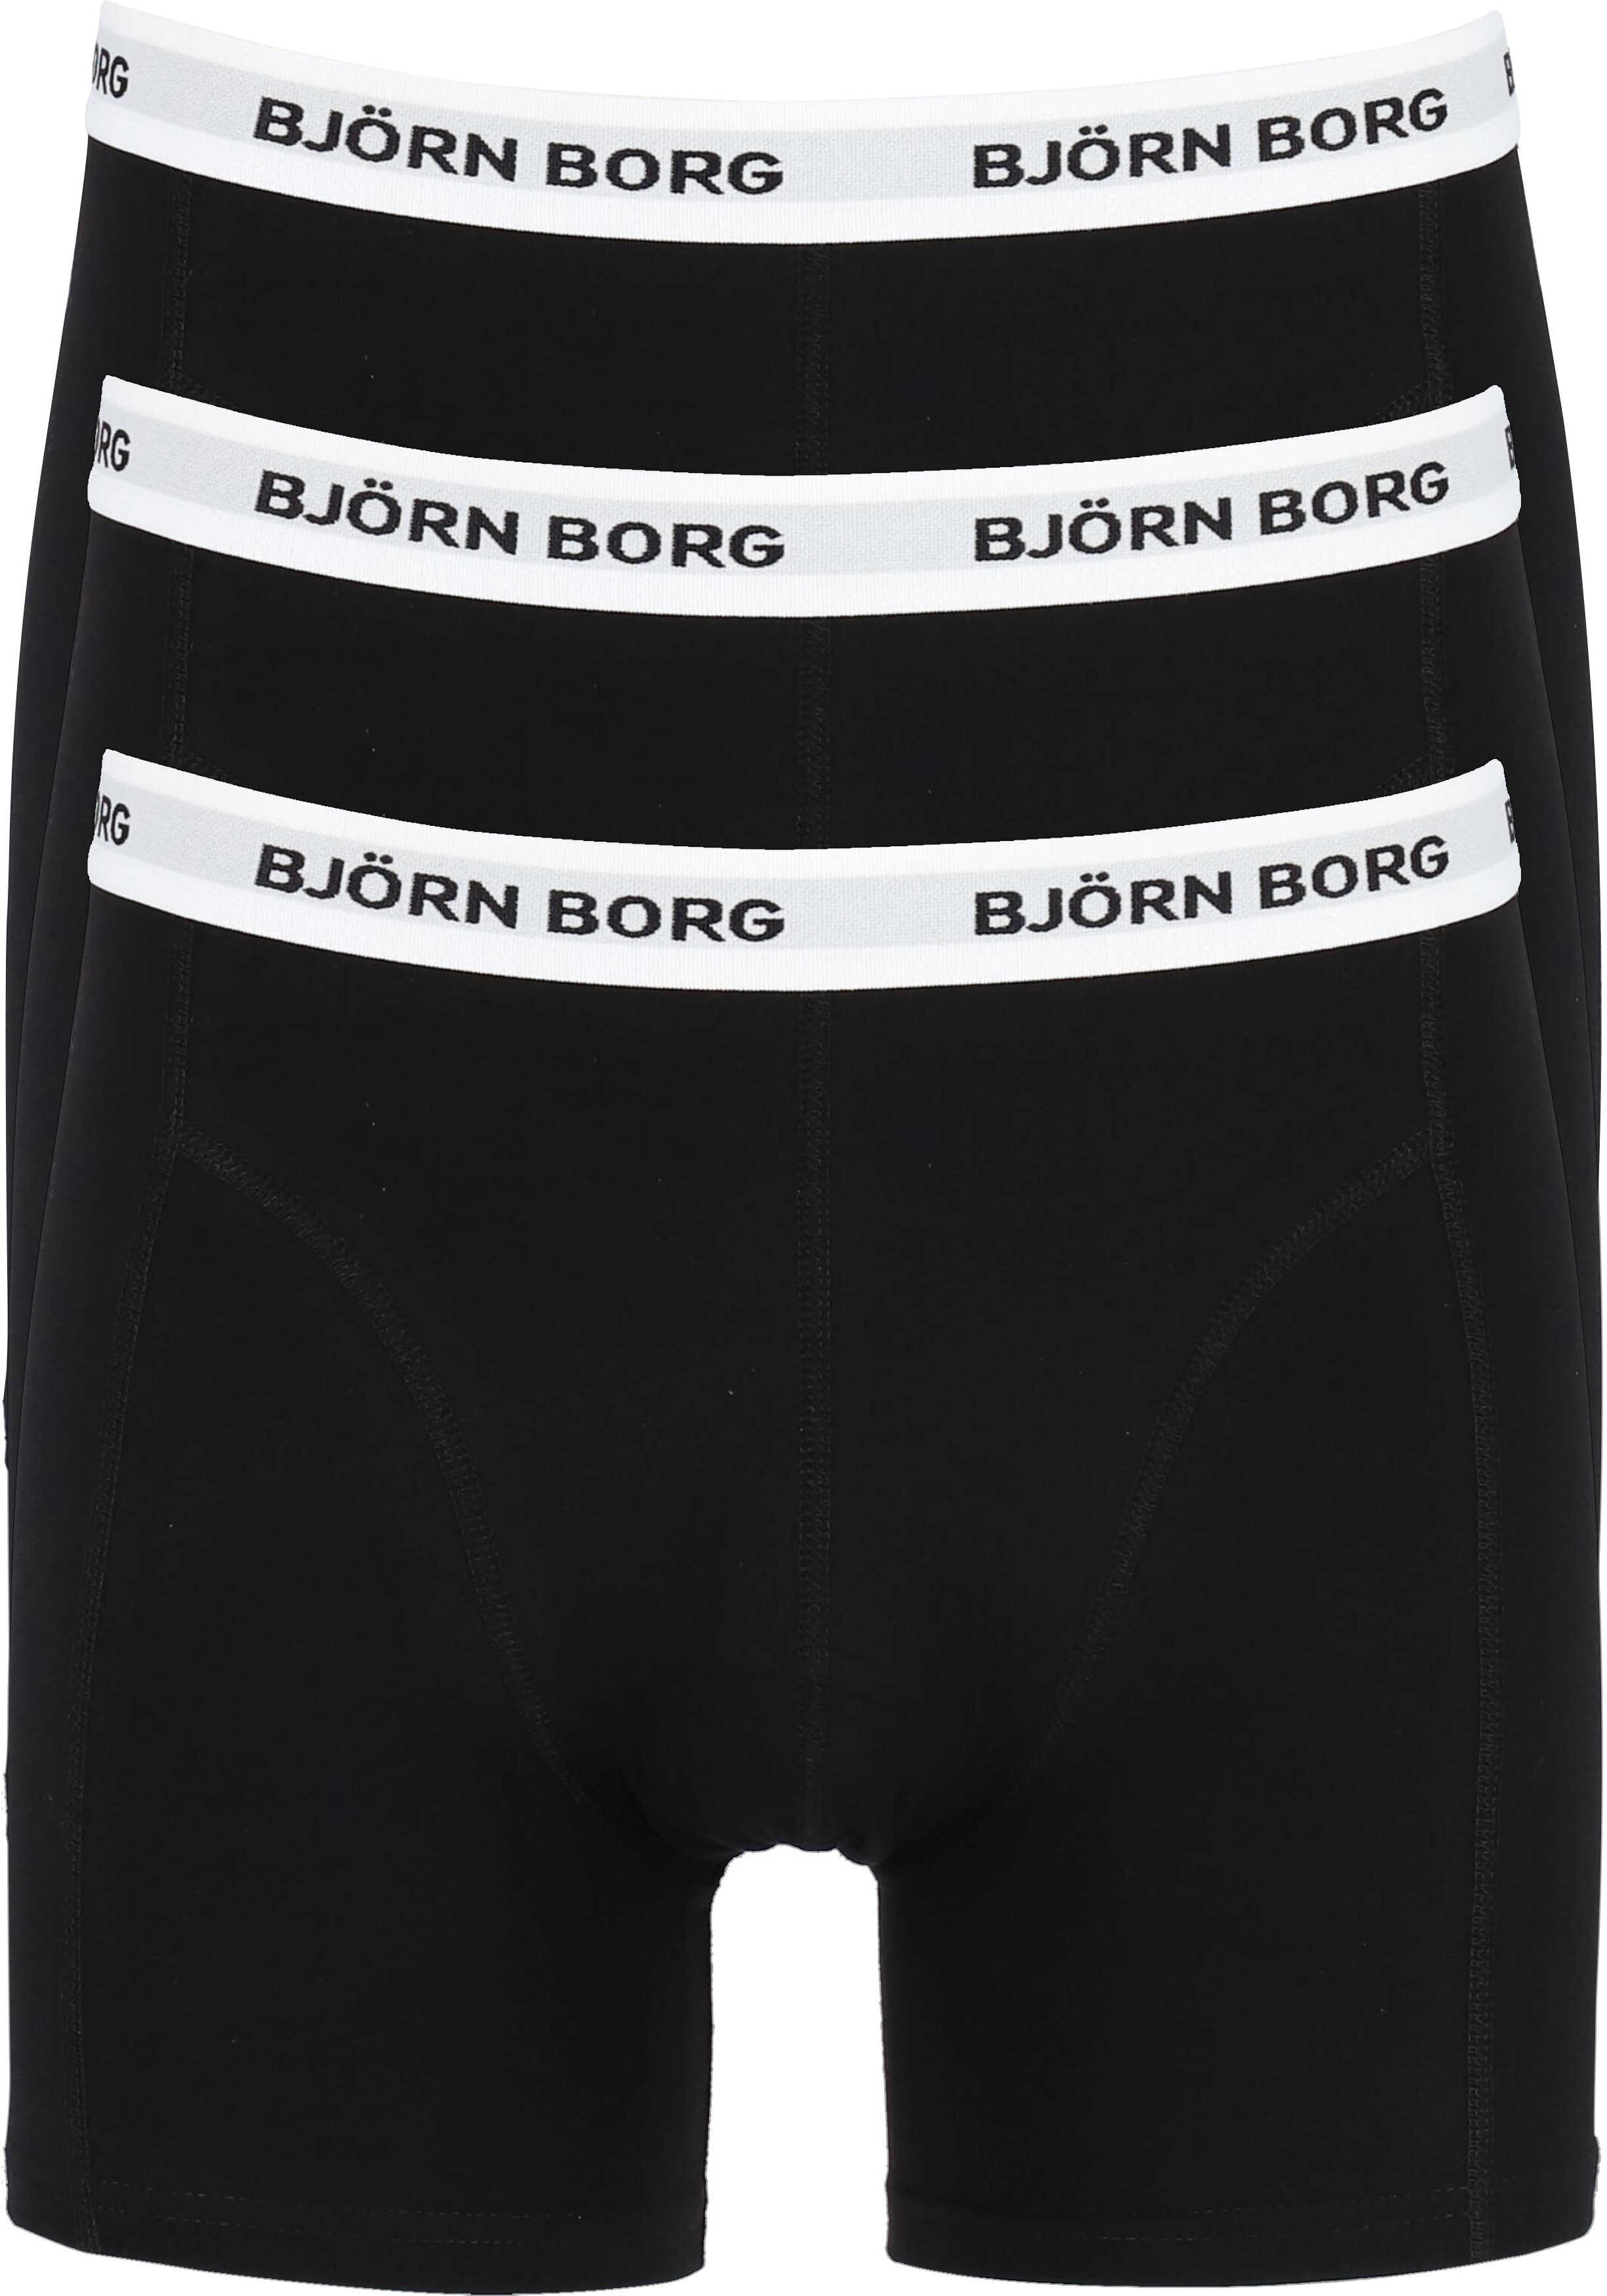 Bjorn Borg boxershorts Essential (3-pack), heren boxers normale lengte, zwart